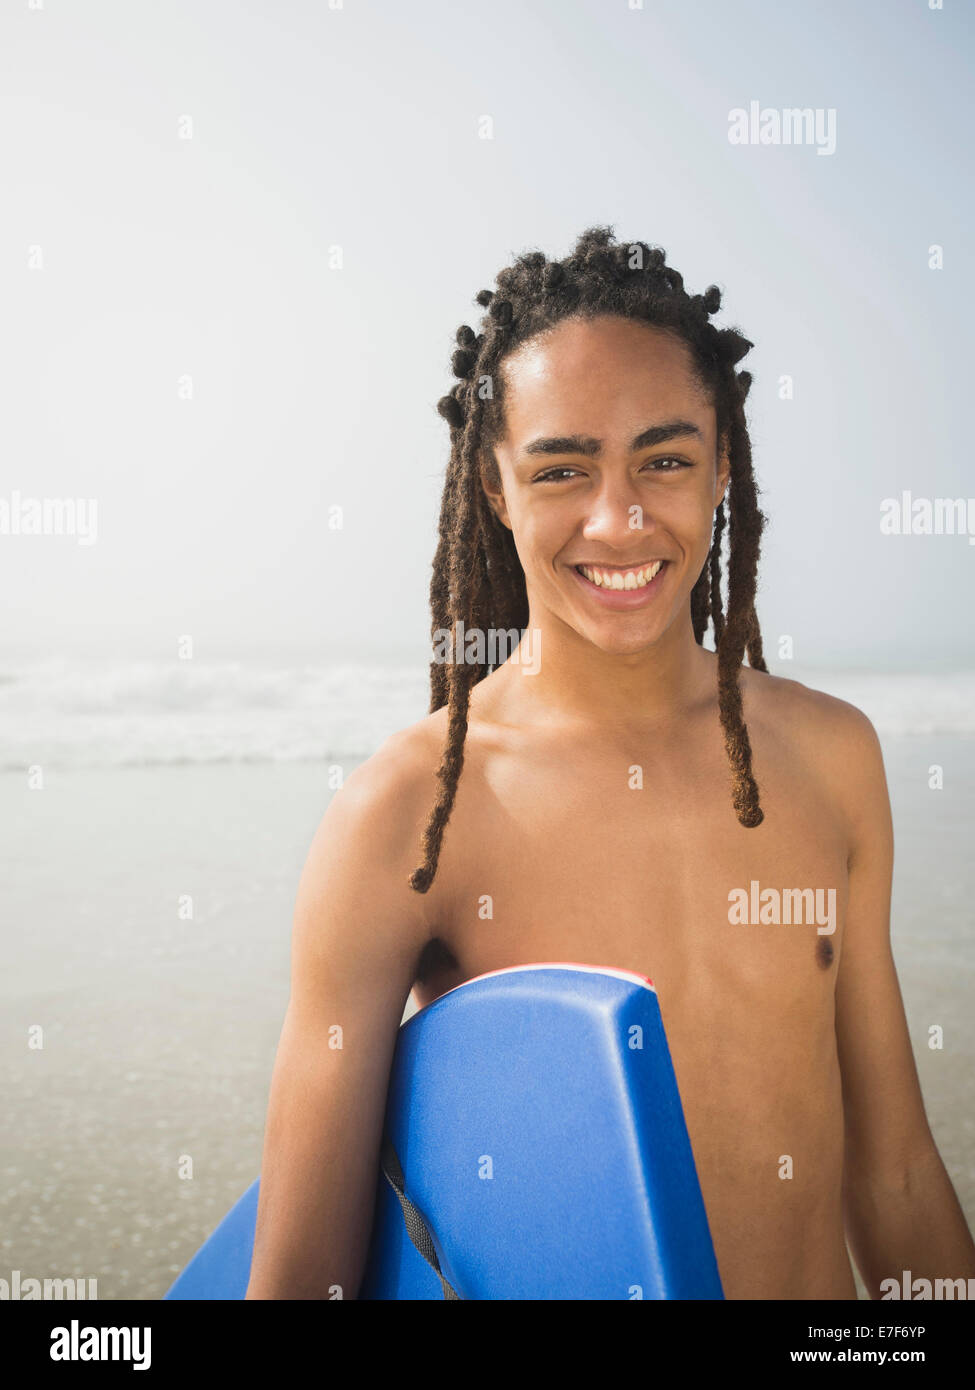 Black Boy transportant du boogie board on beach Banque D'Images